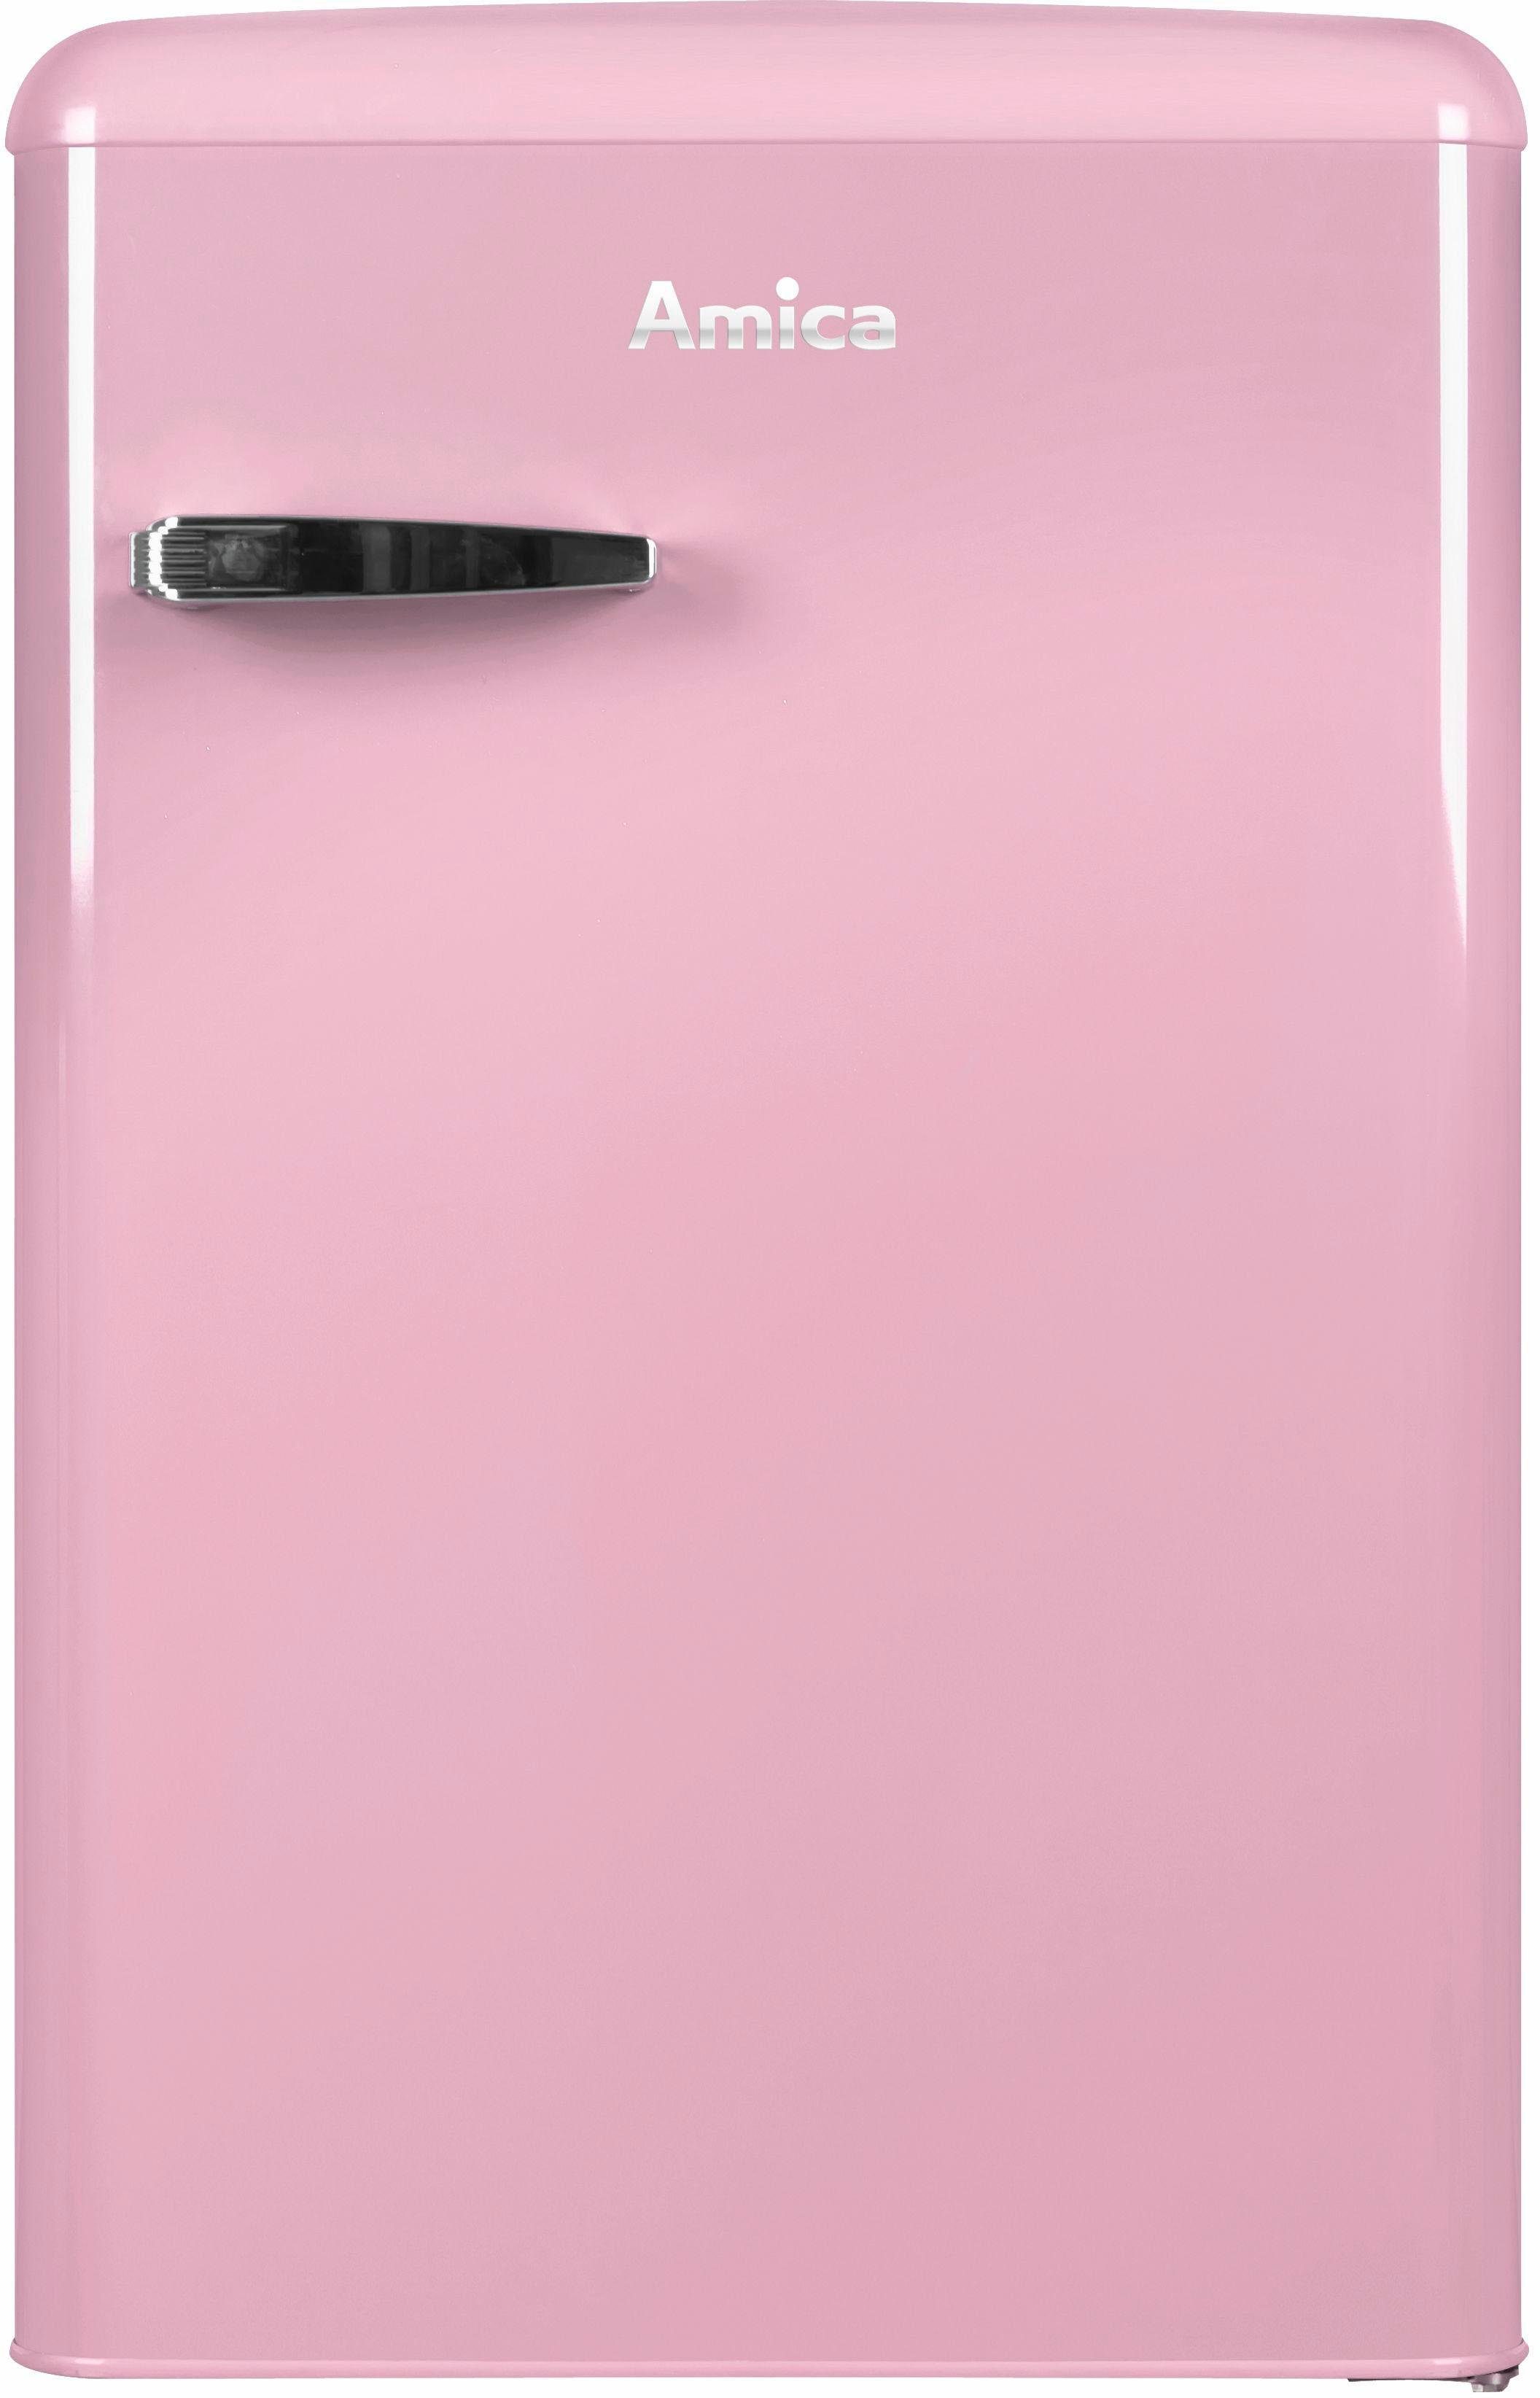 Amica Table Top Kühlschrank pink hoch, breit P, KS 15616 cm 55 cm 87,5